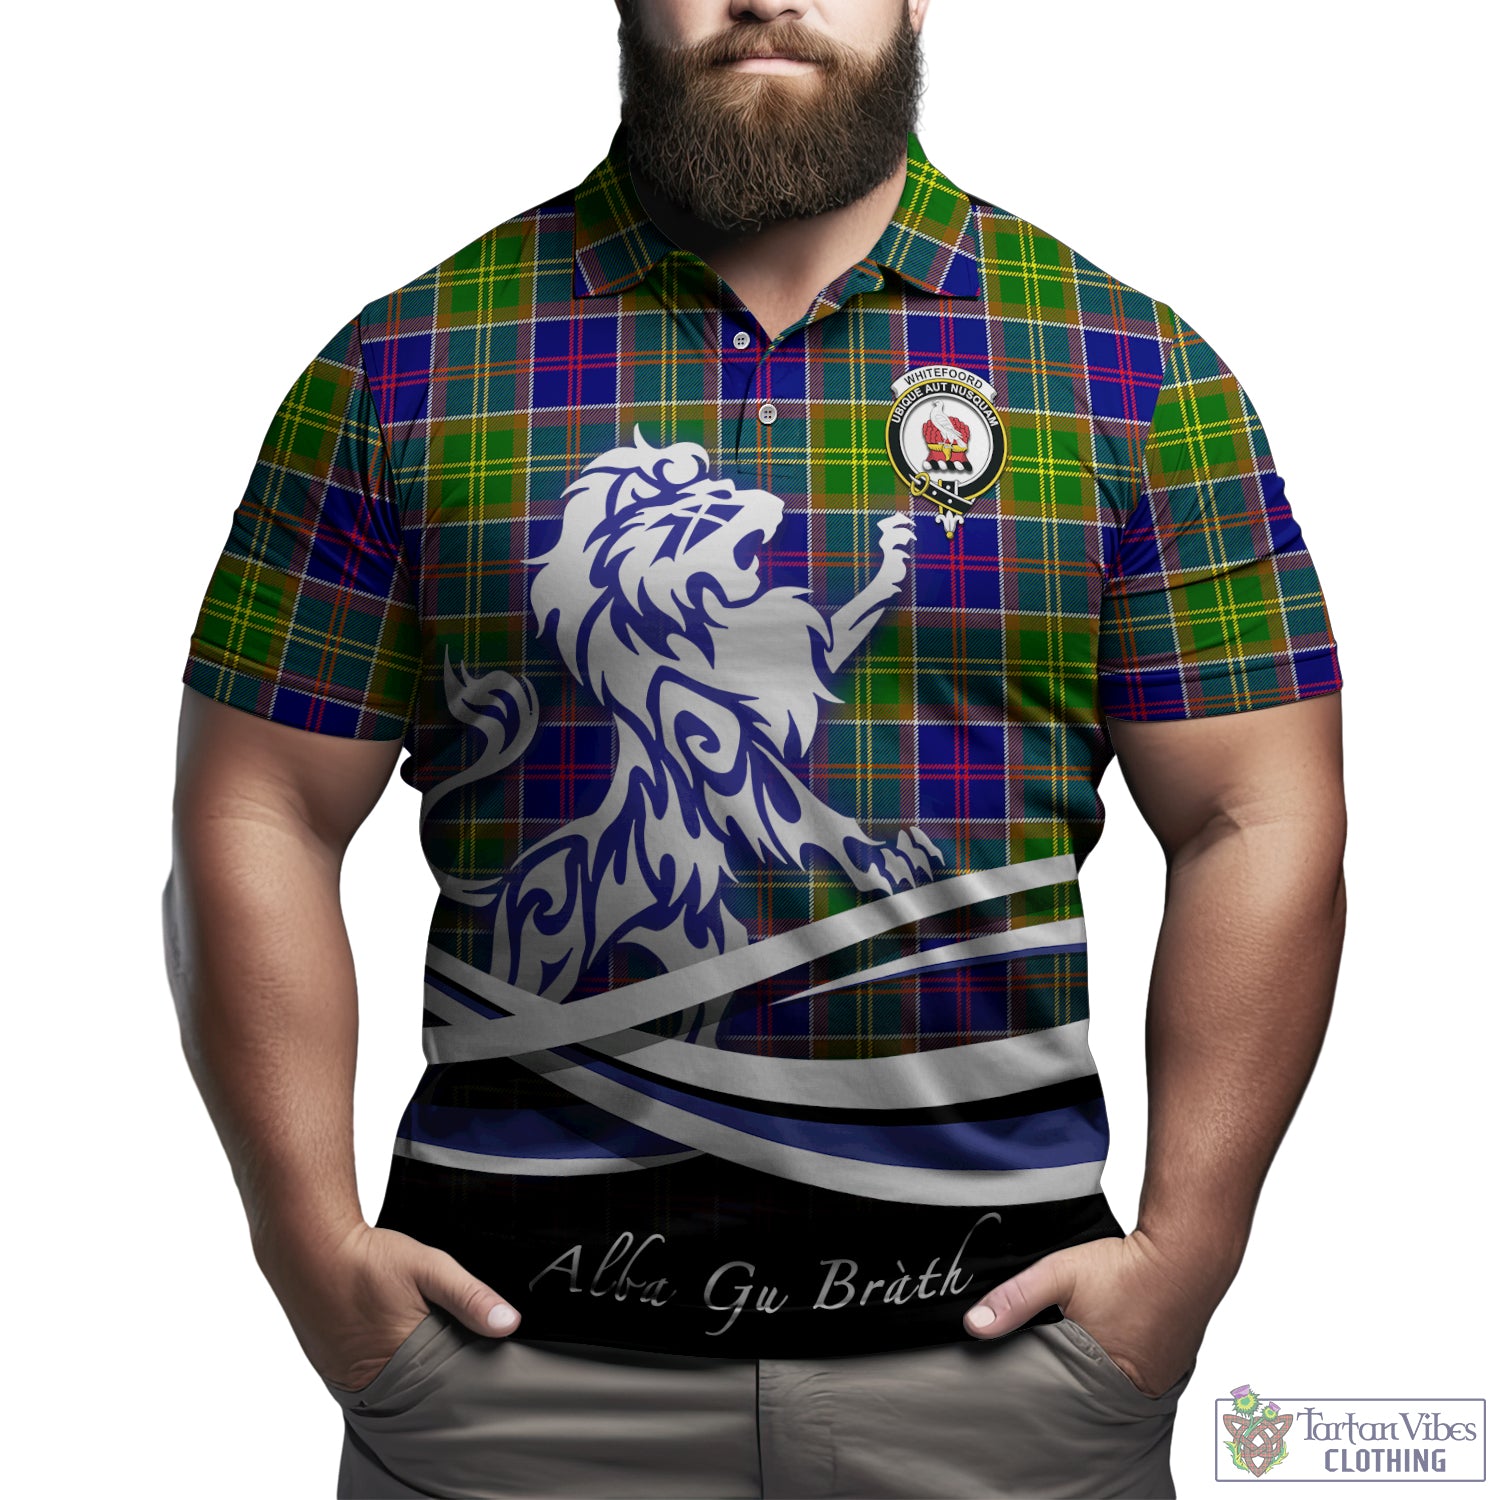 whitefoord-modern-tartan-polo-shirt-with-alba-gu-brath-regal-lion-emblem